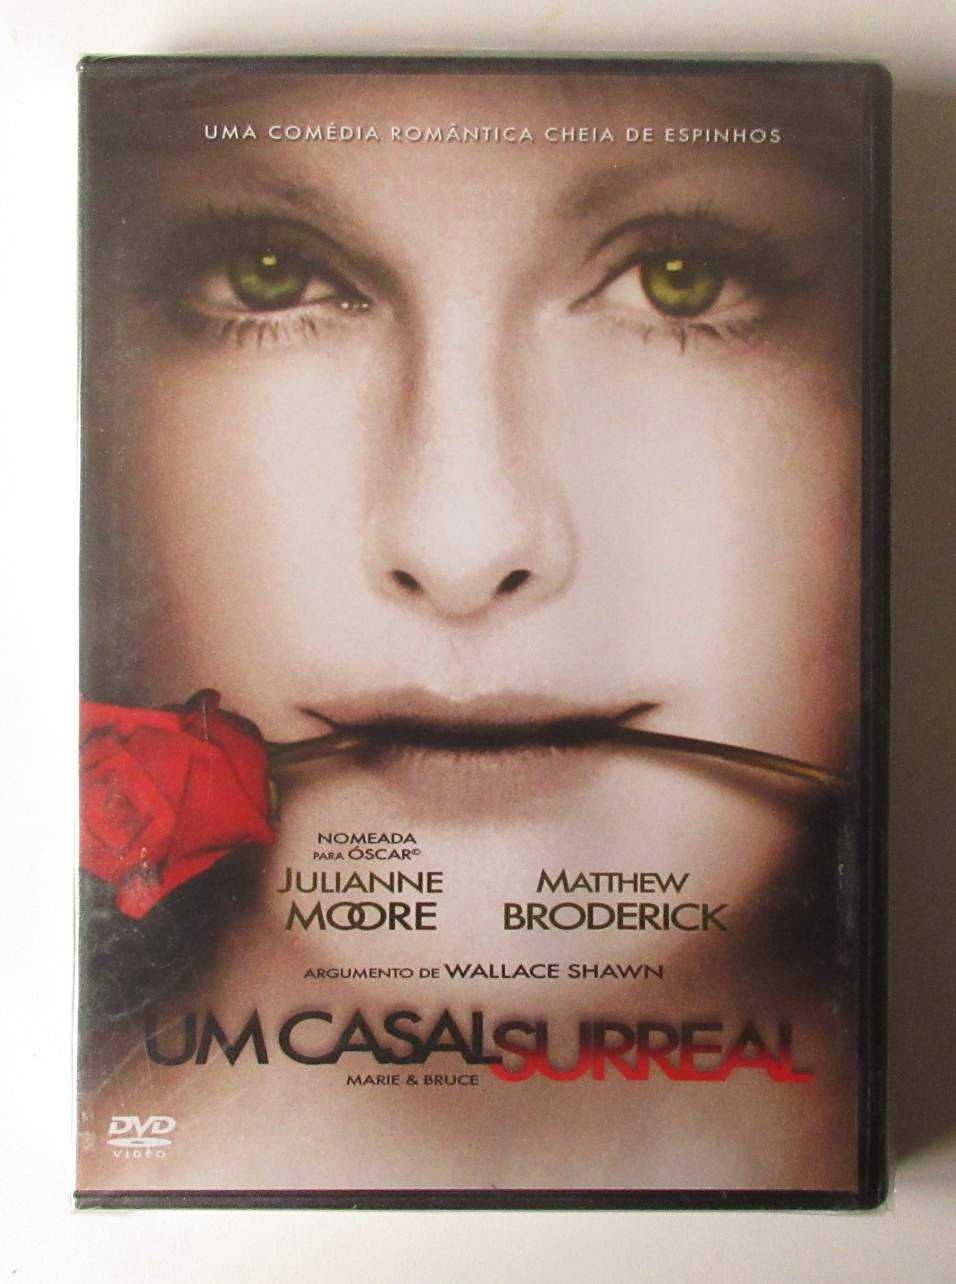 Um Casal Surreal (Julianne Moore) (DVD NOVO / SELADO)